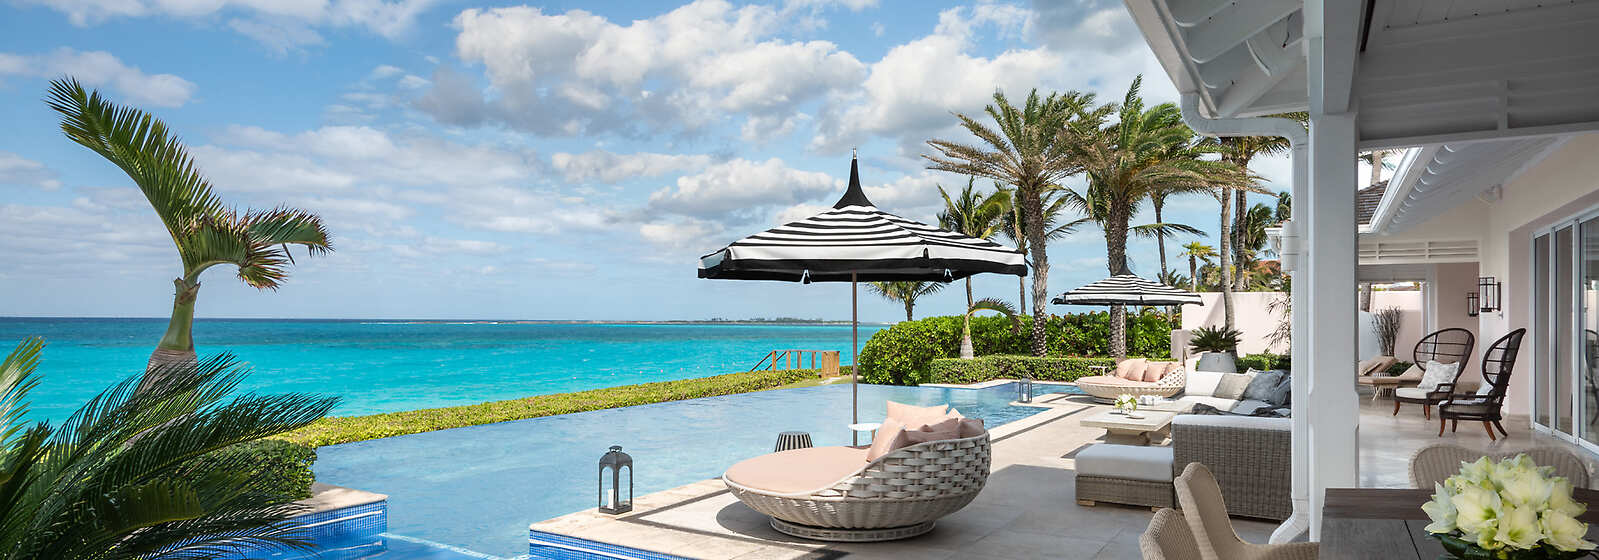 The Ocean Club, A Four Seasons Resort, Bahamas 